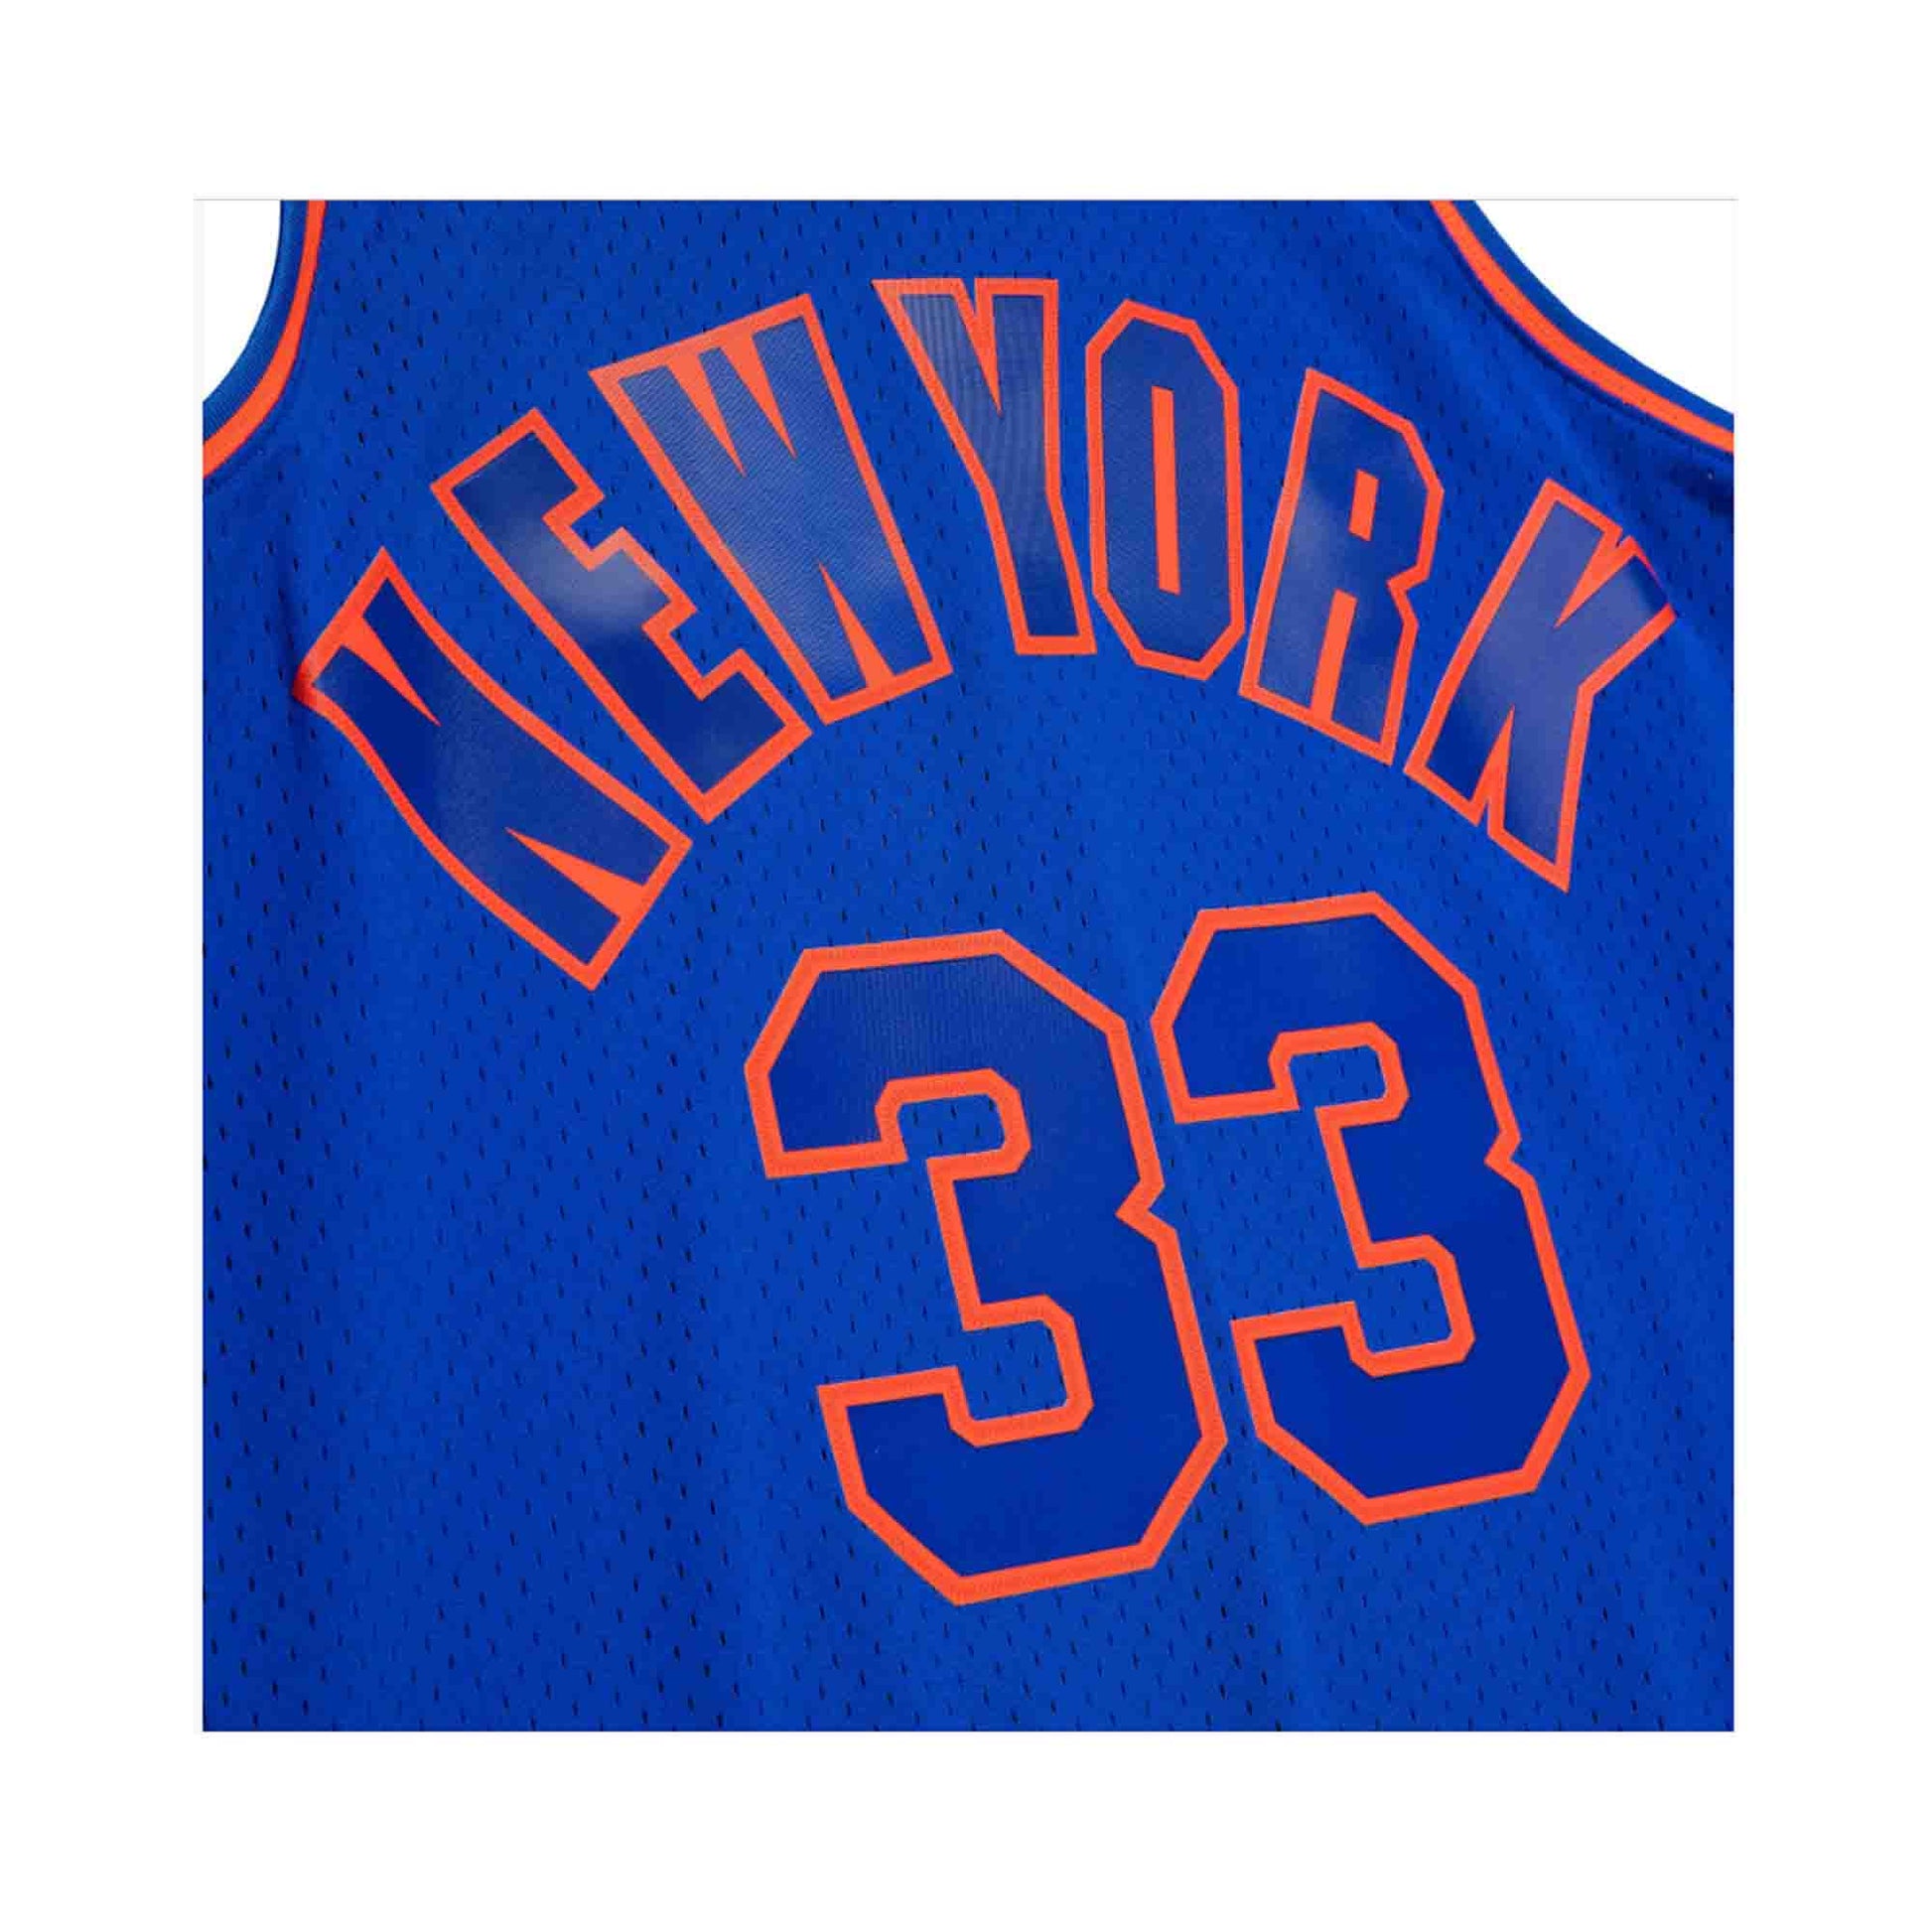 Authentic Patrick Ewing New York Knicks 1998-99 Jersey - Shop